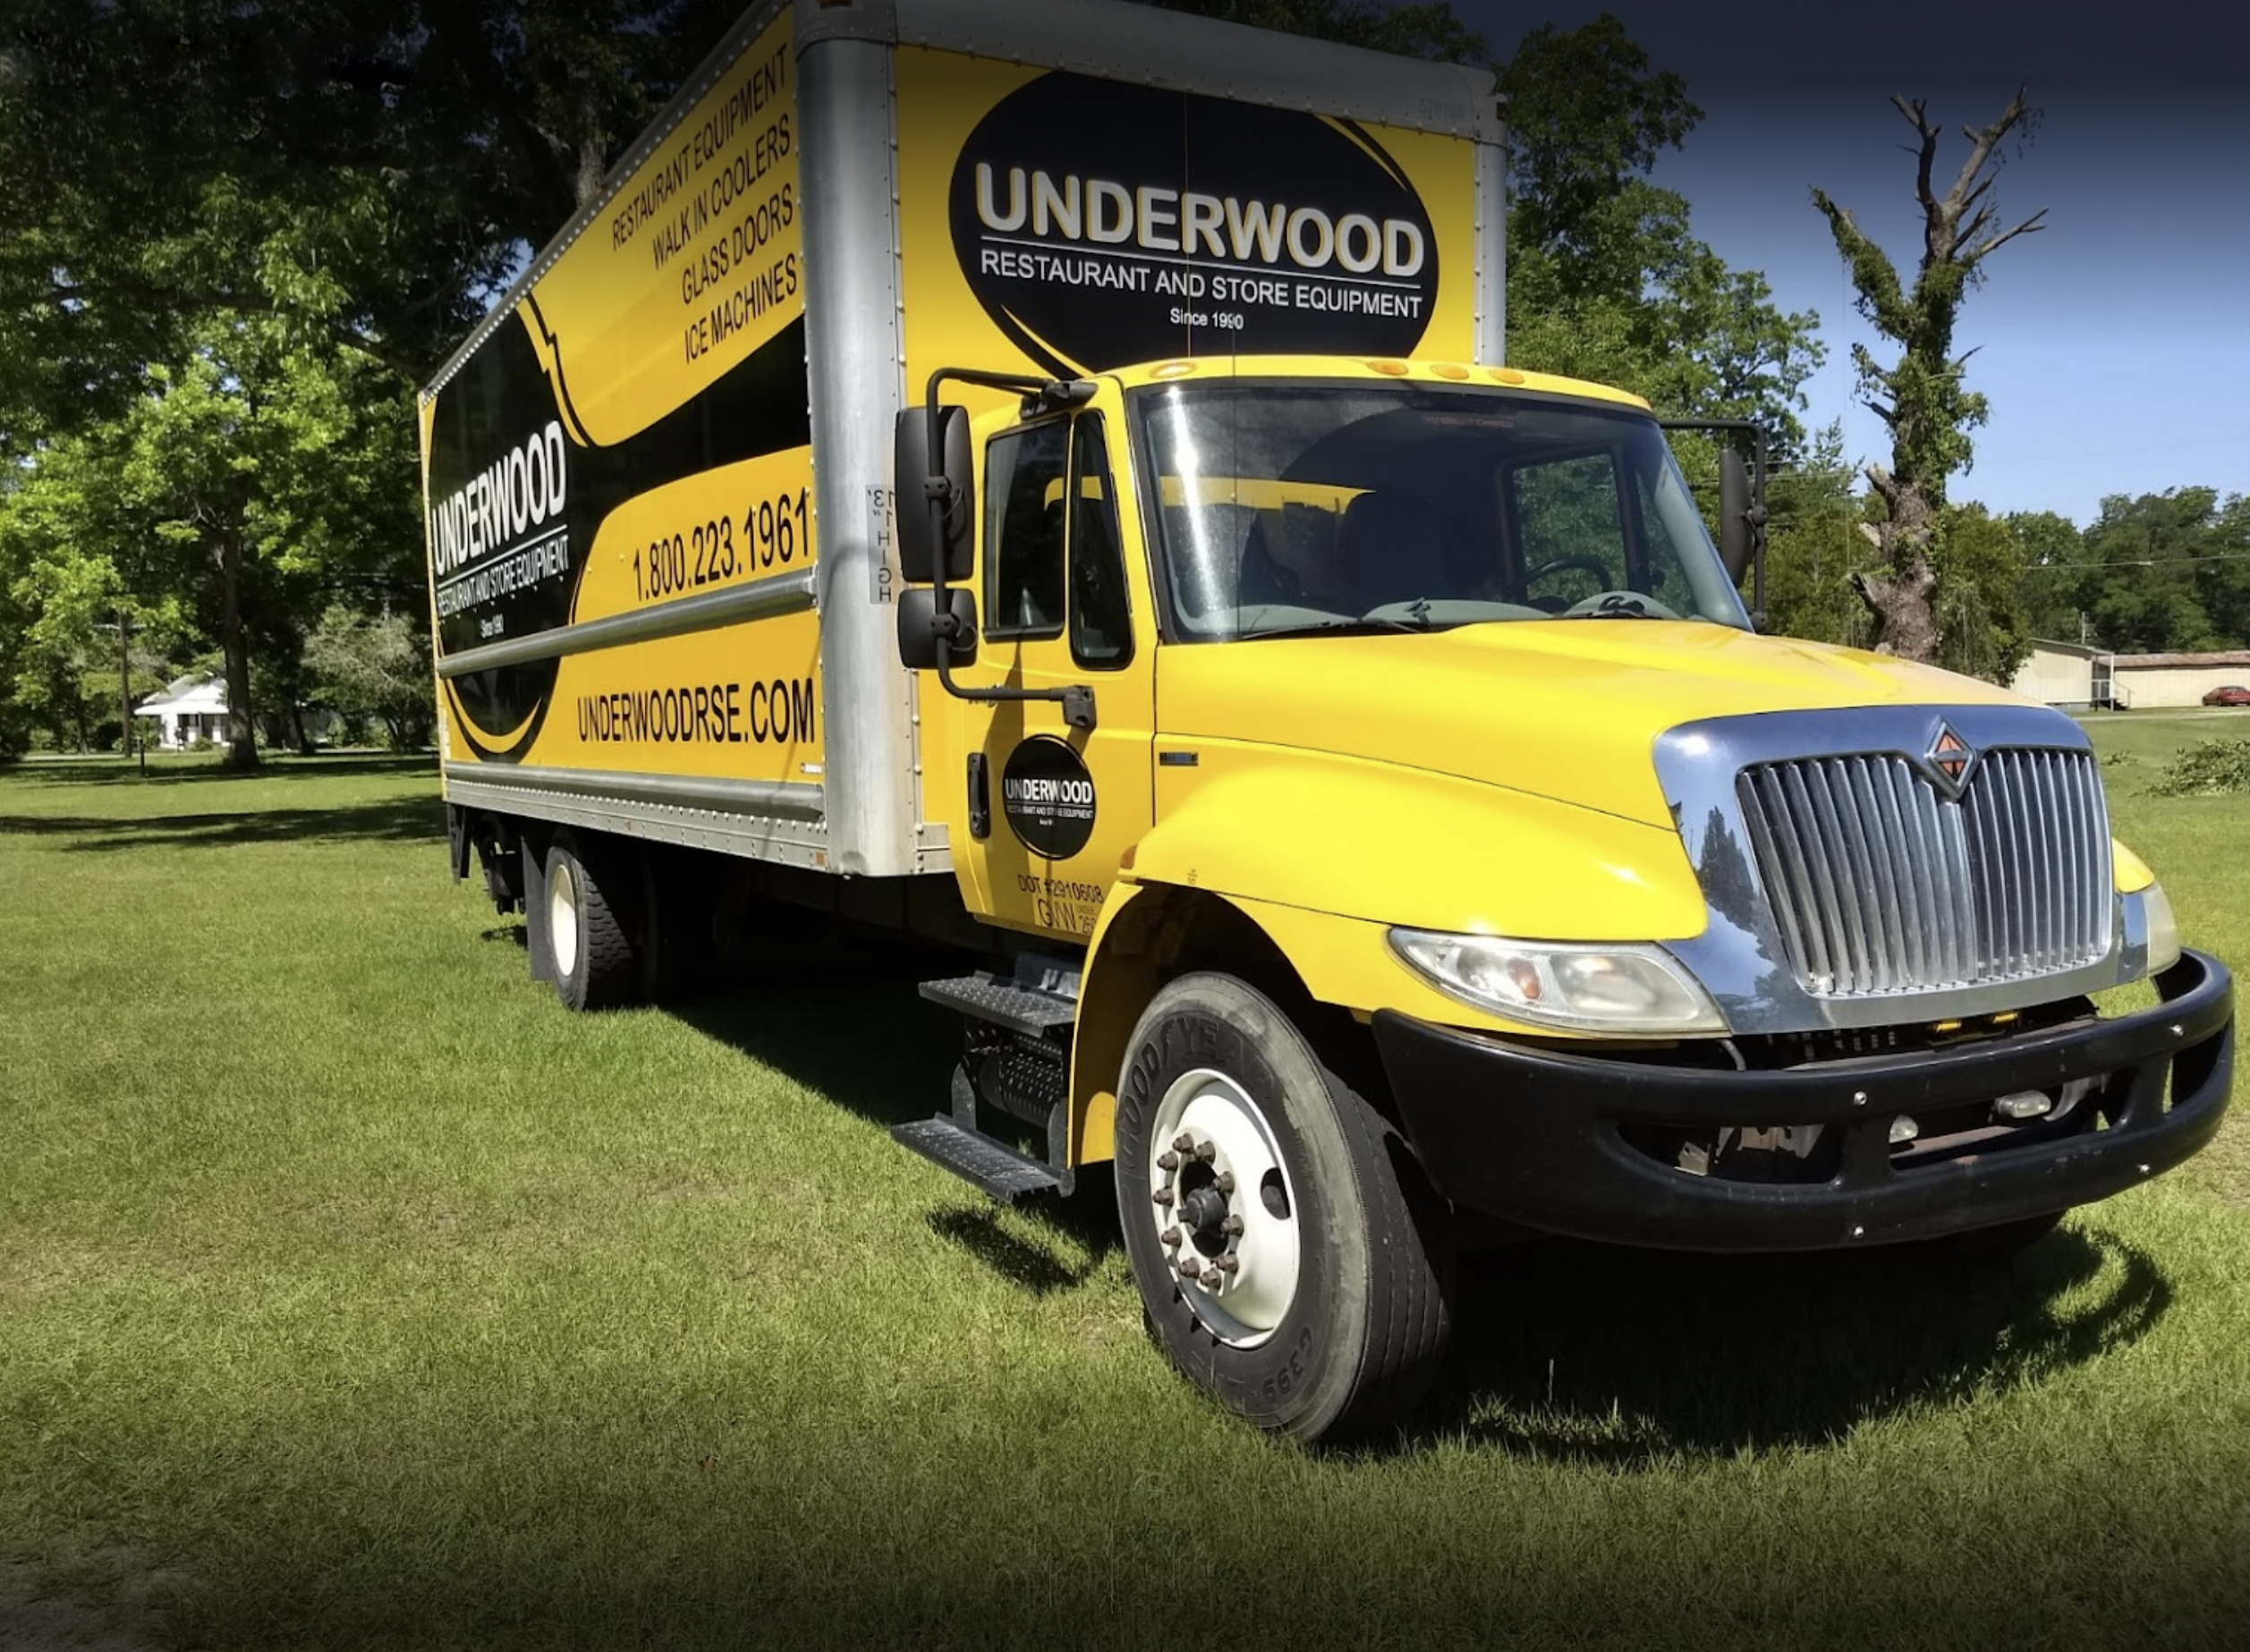 Underwood Restaurant & Store Equipment | Equipment Truck